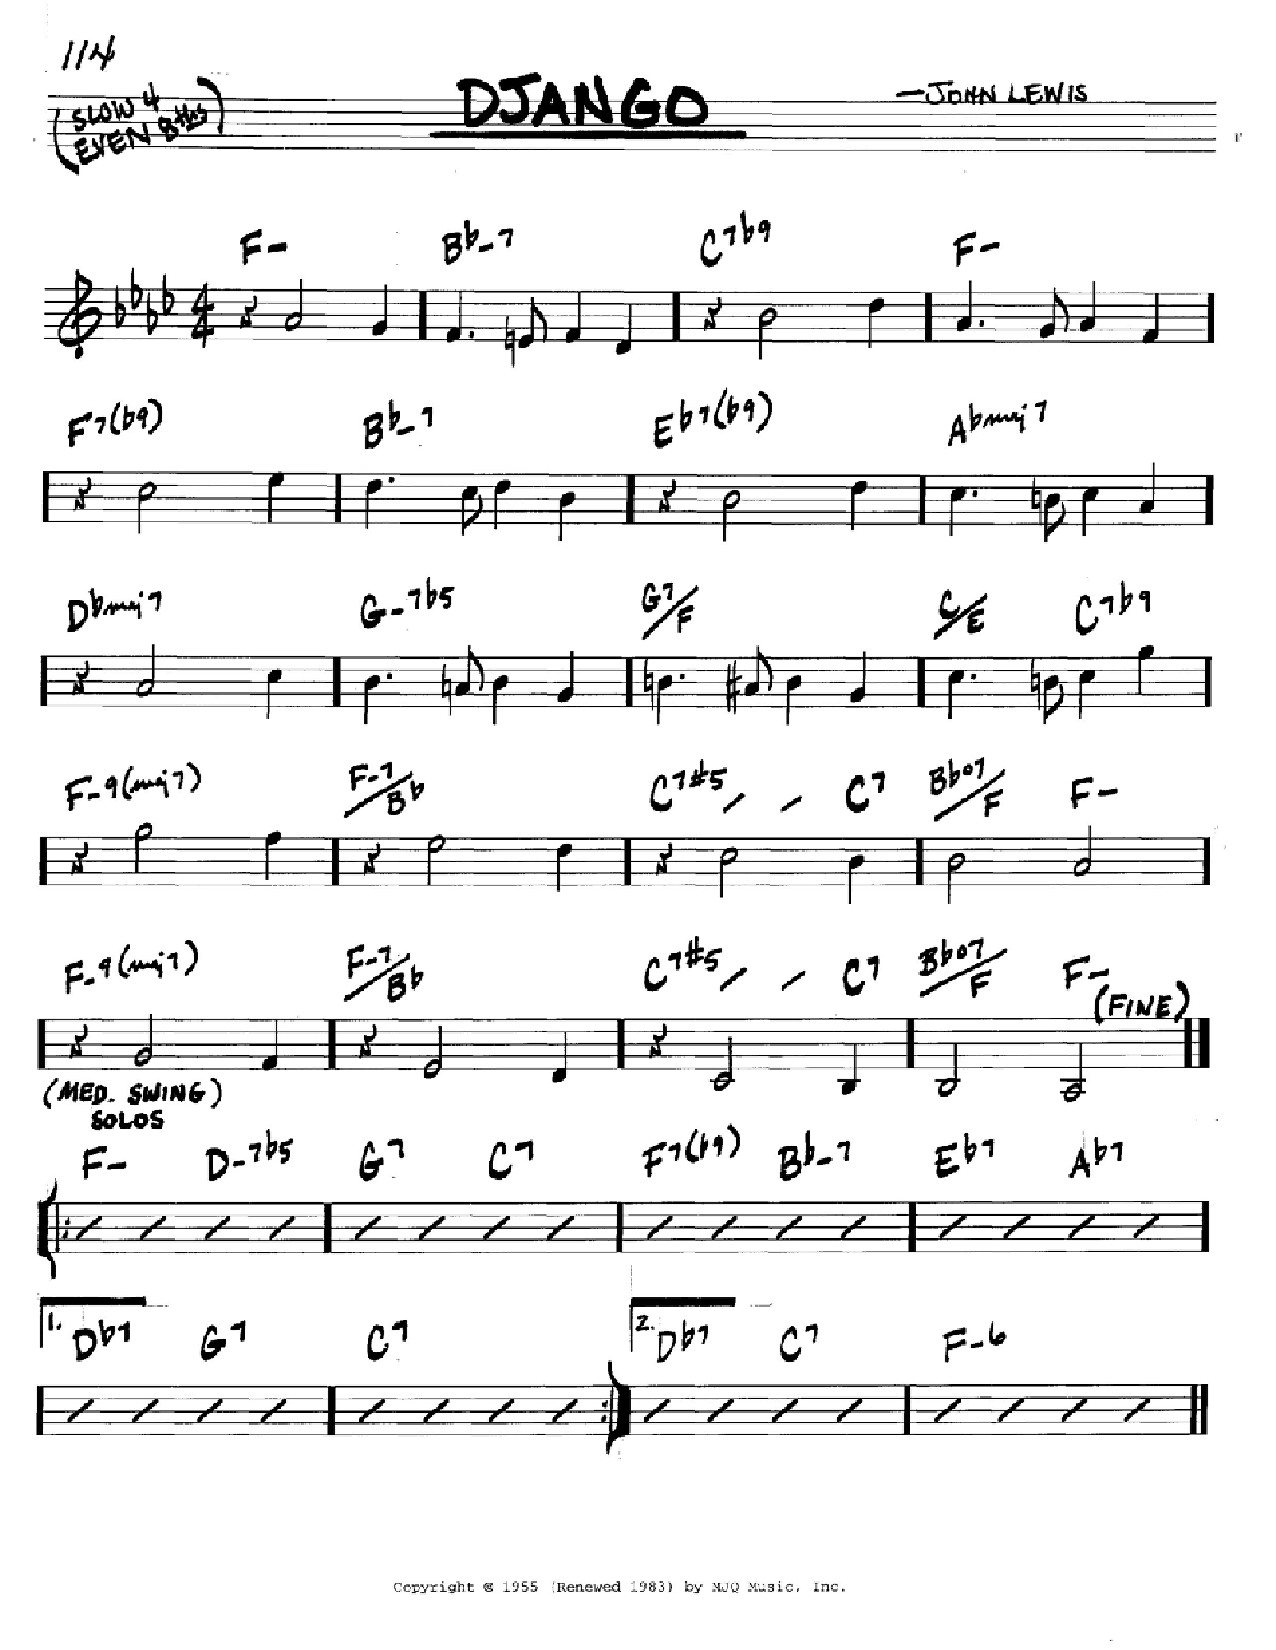 John Lewis Django Sheet Music Notes & Chords for Piano, Vocal & Guitar (Right-Hand Melody) - Download or Print PDF